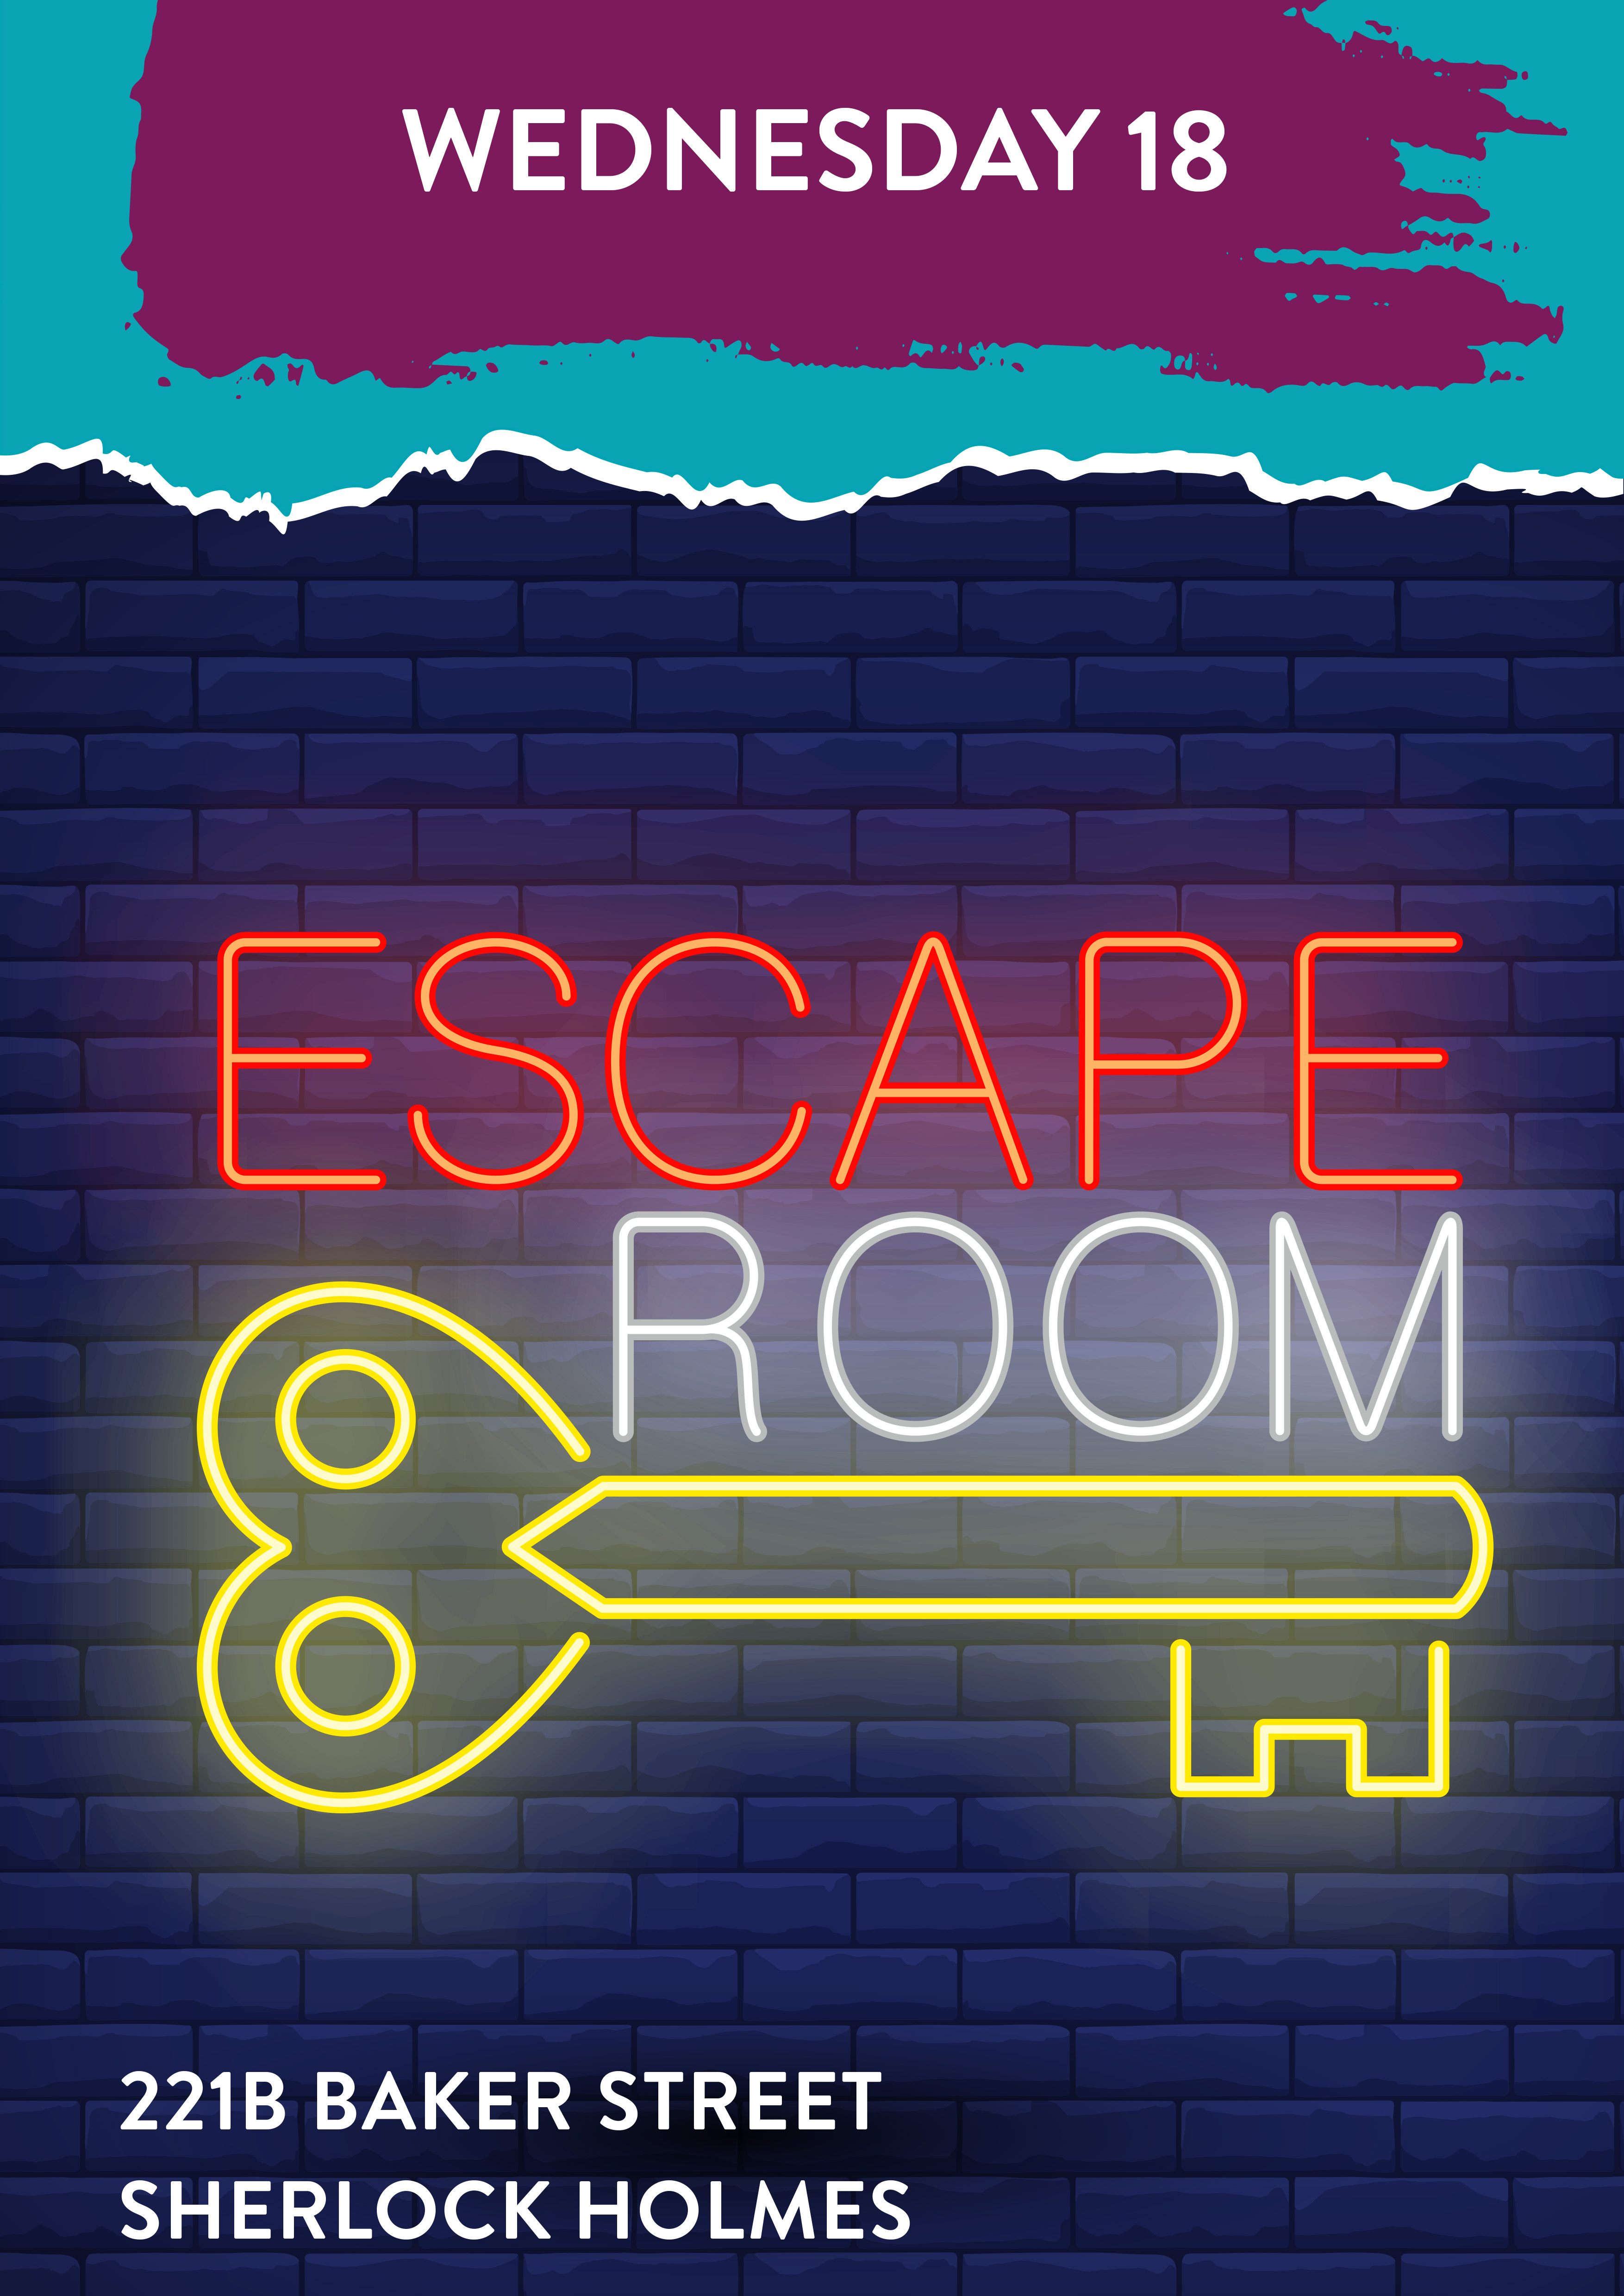 Wednesday 18 January. Escape Room. 221B Baker Street. Sherlock Holmes.